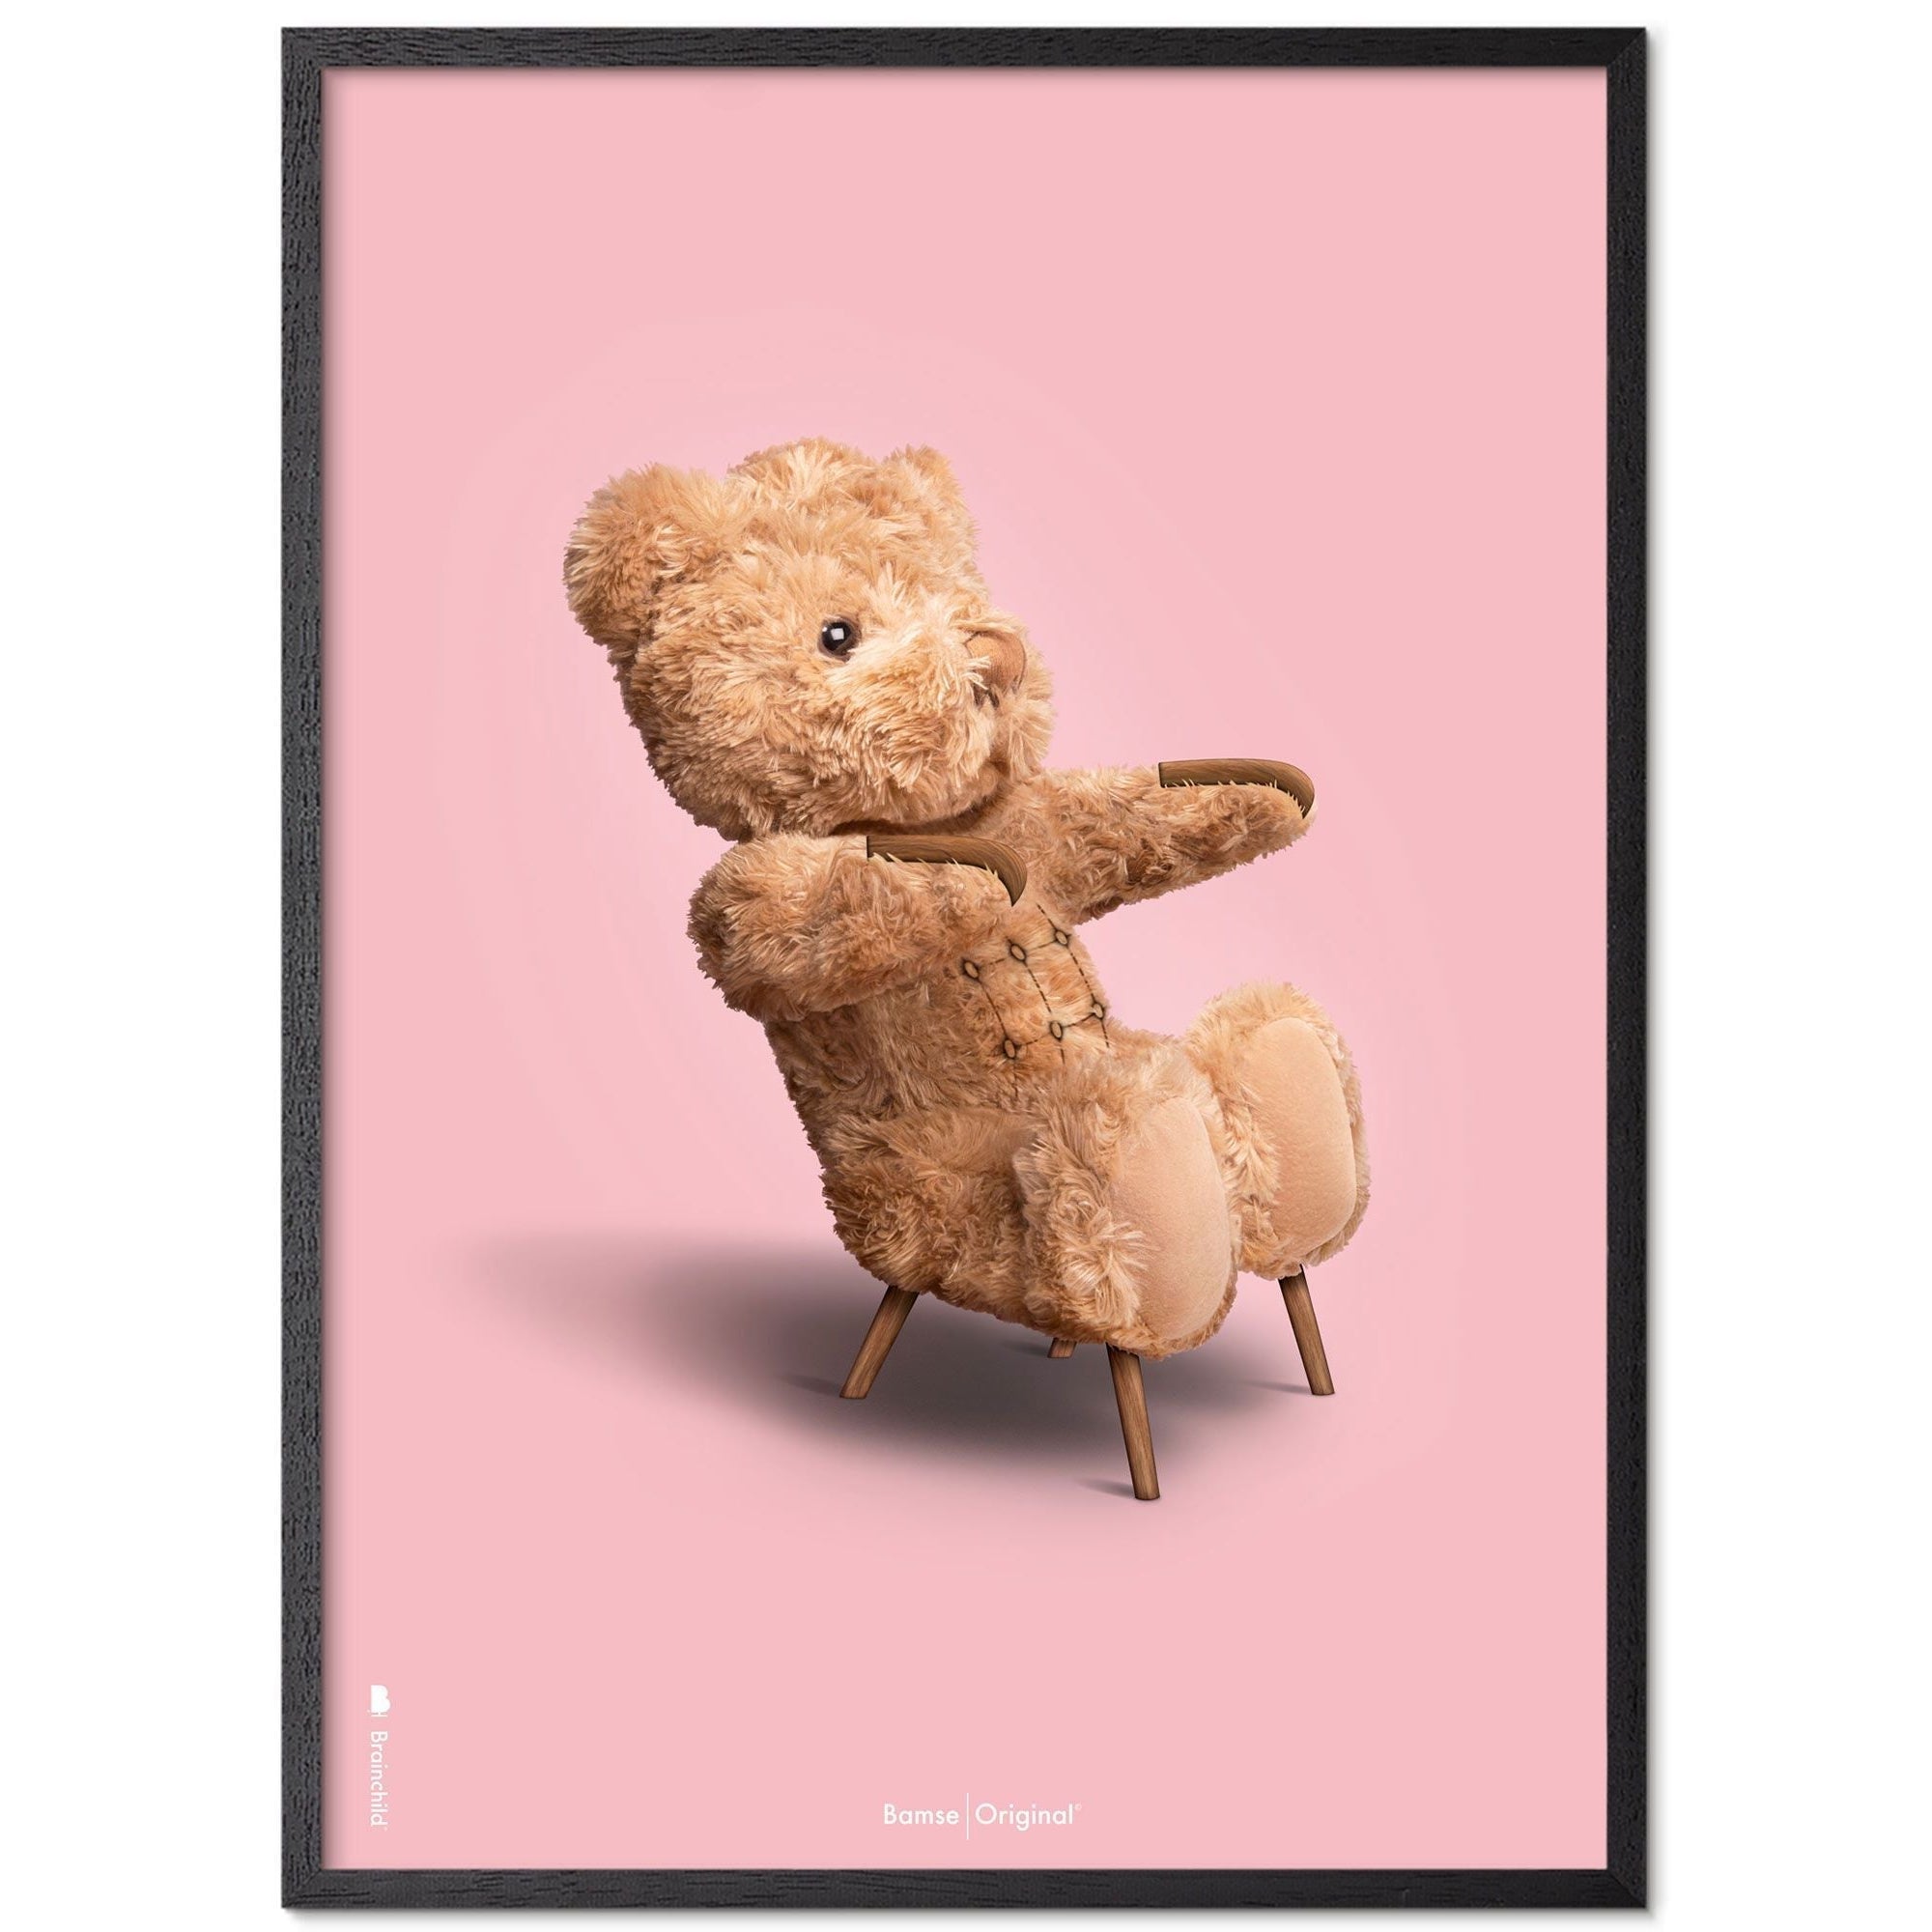 Brainchild Teddybeer klassiek poster frame gemaakt van zwart gelakte hout 50x70 cm, roze achtergrond